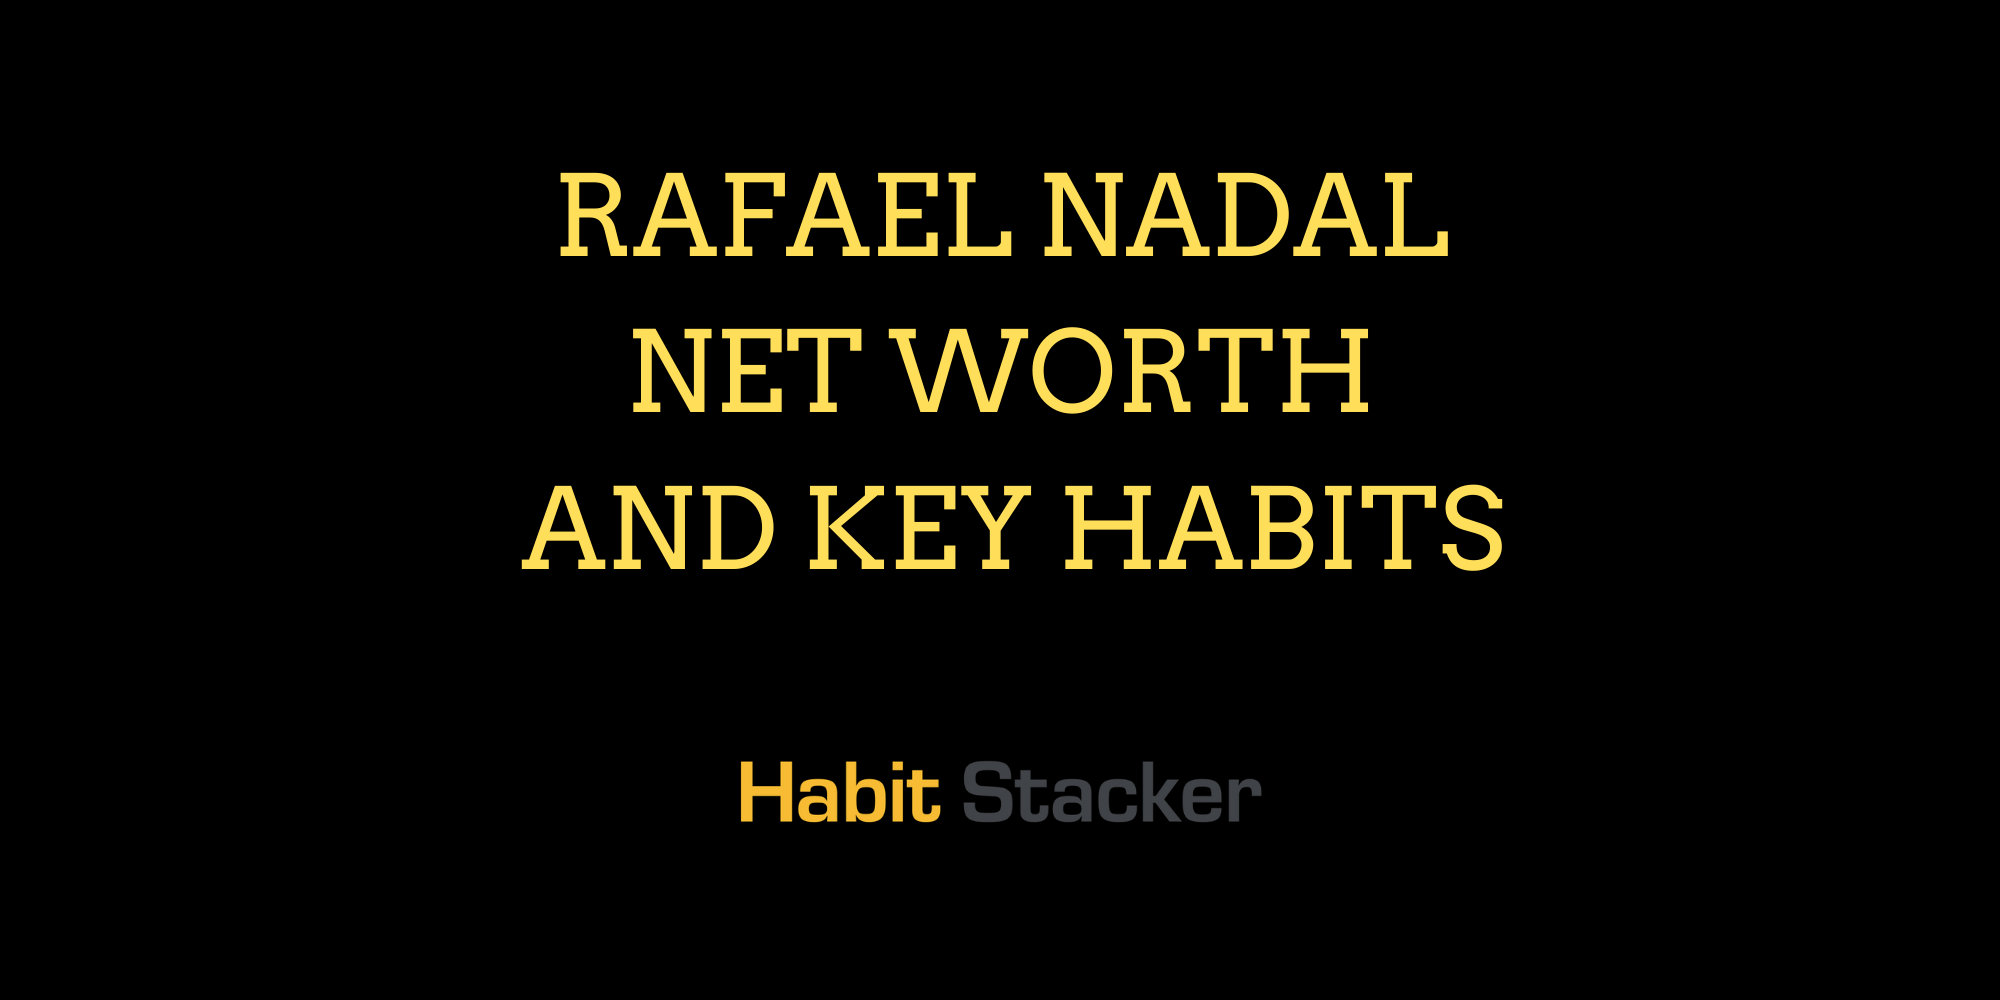 Rafael Nadal Net Worth and Key Habits